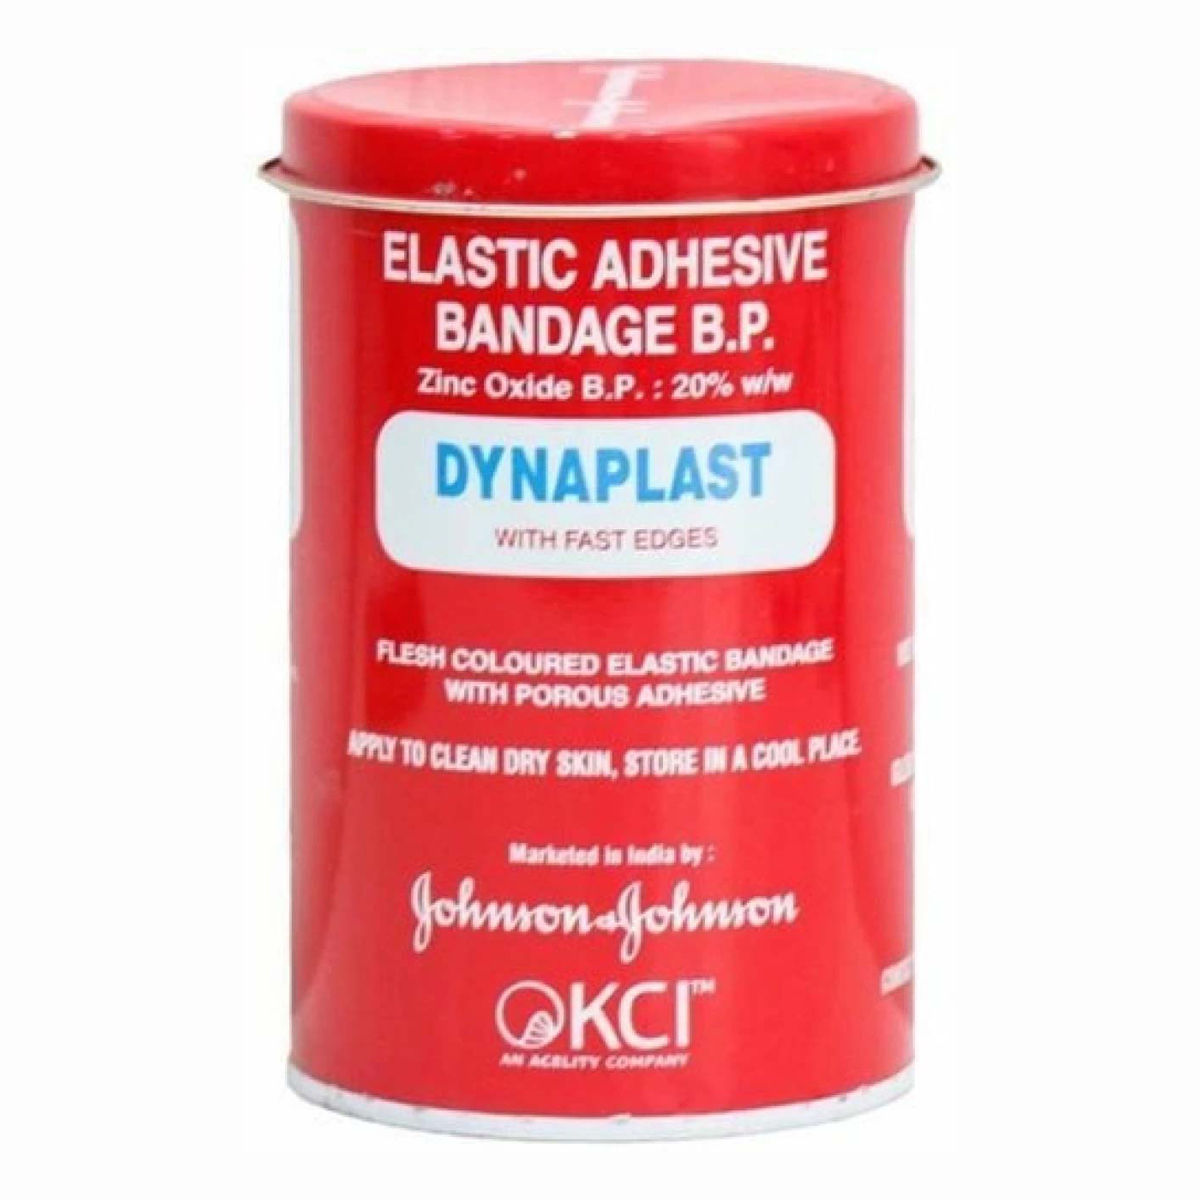 Dynaplast Elastic Adhesive Bandage, 1 Count, Pack of 1 